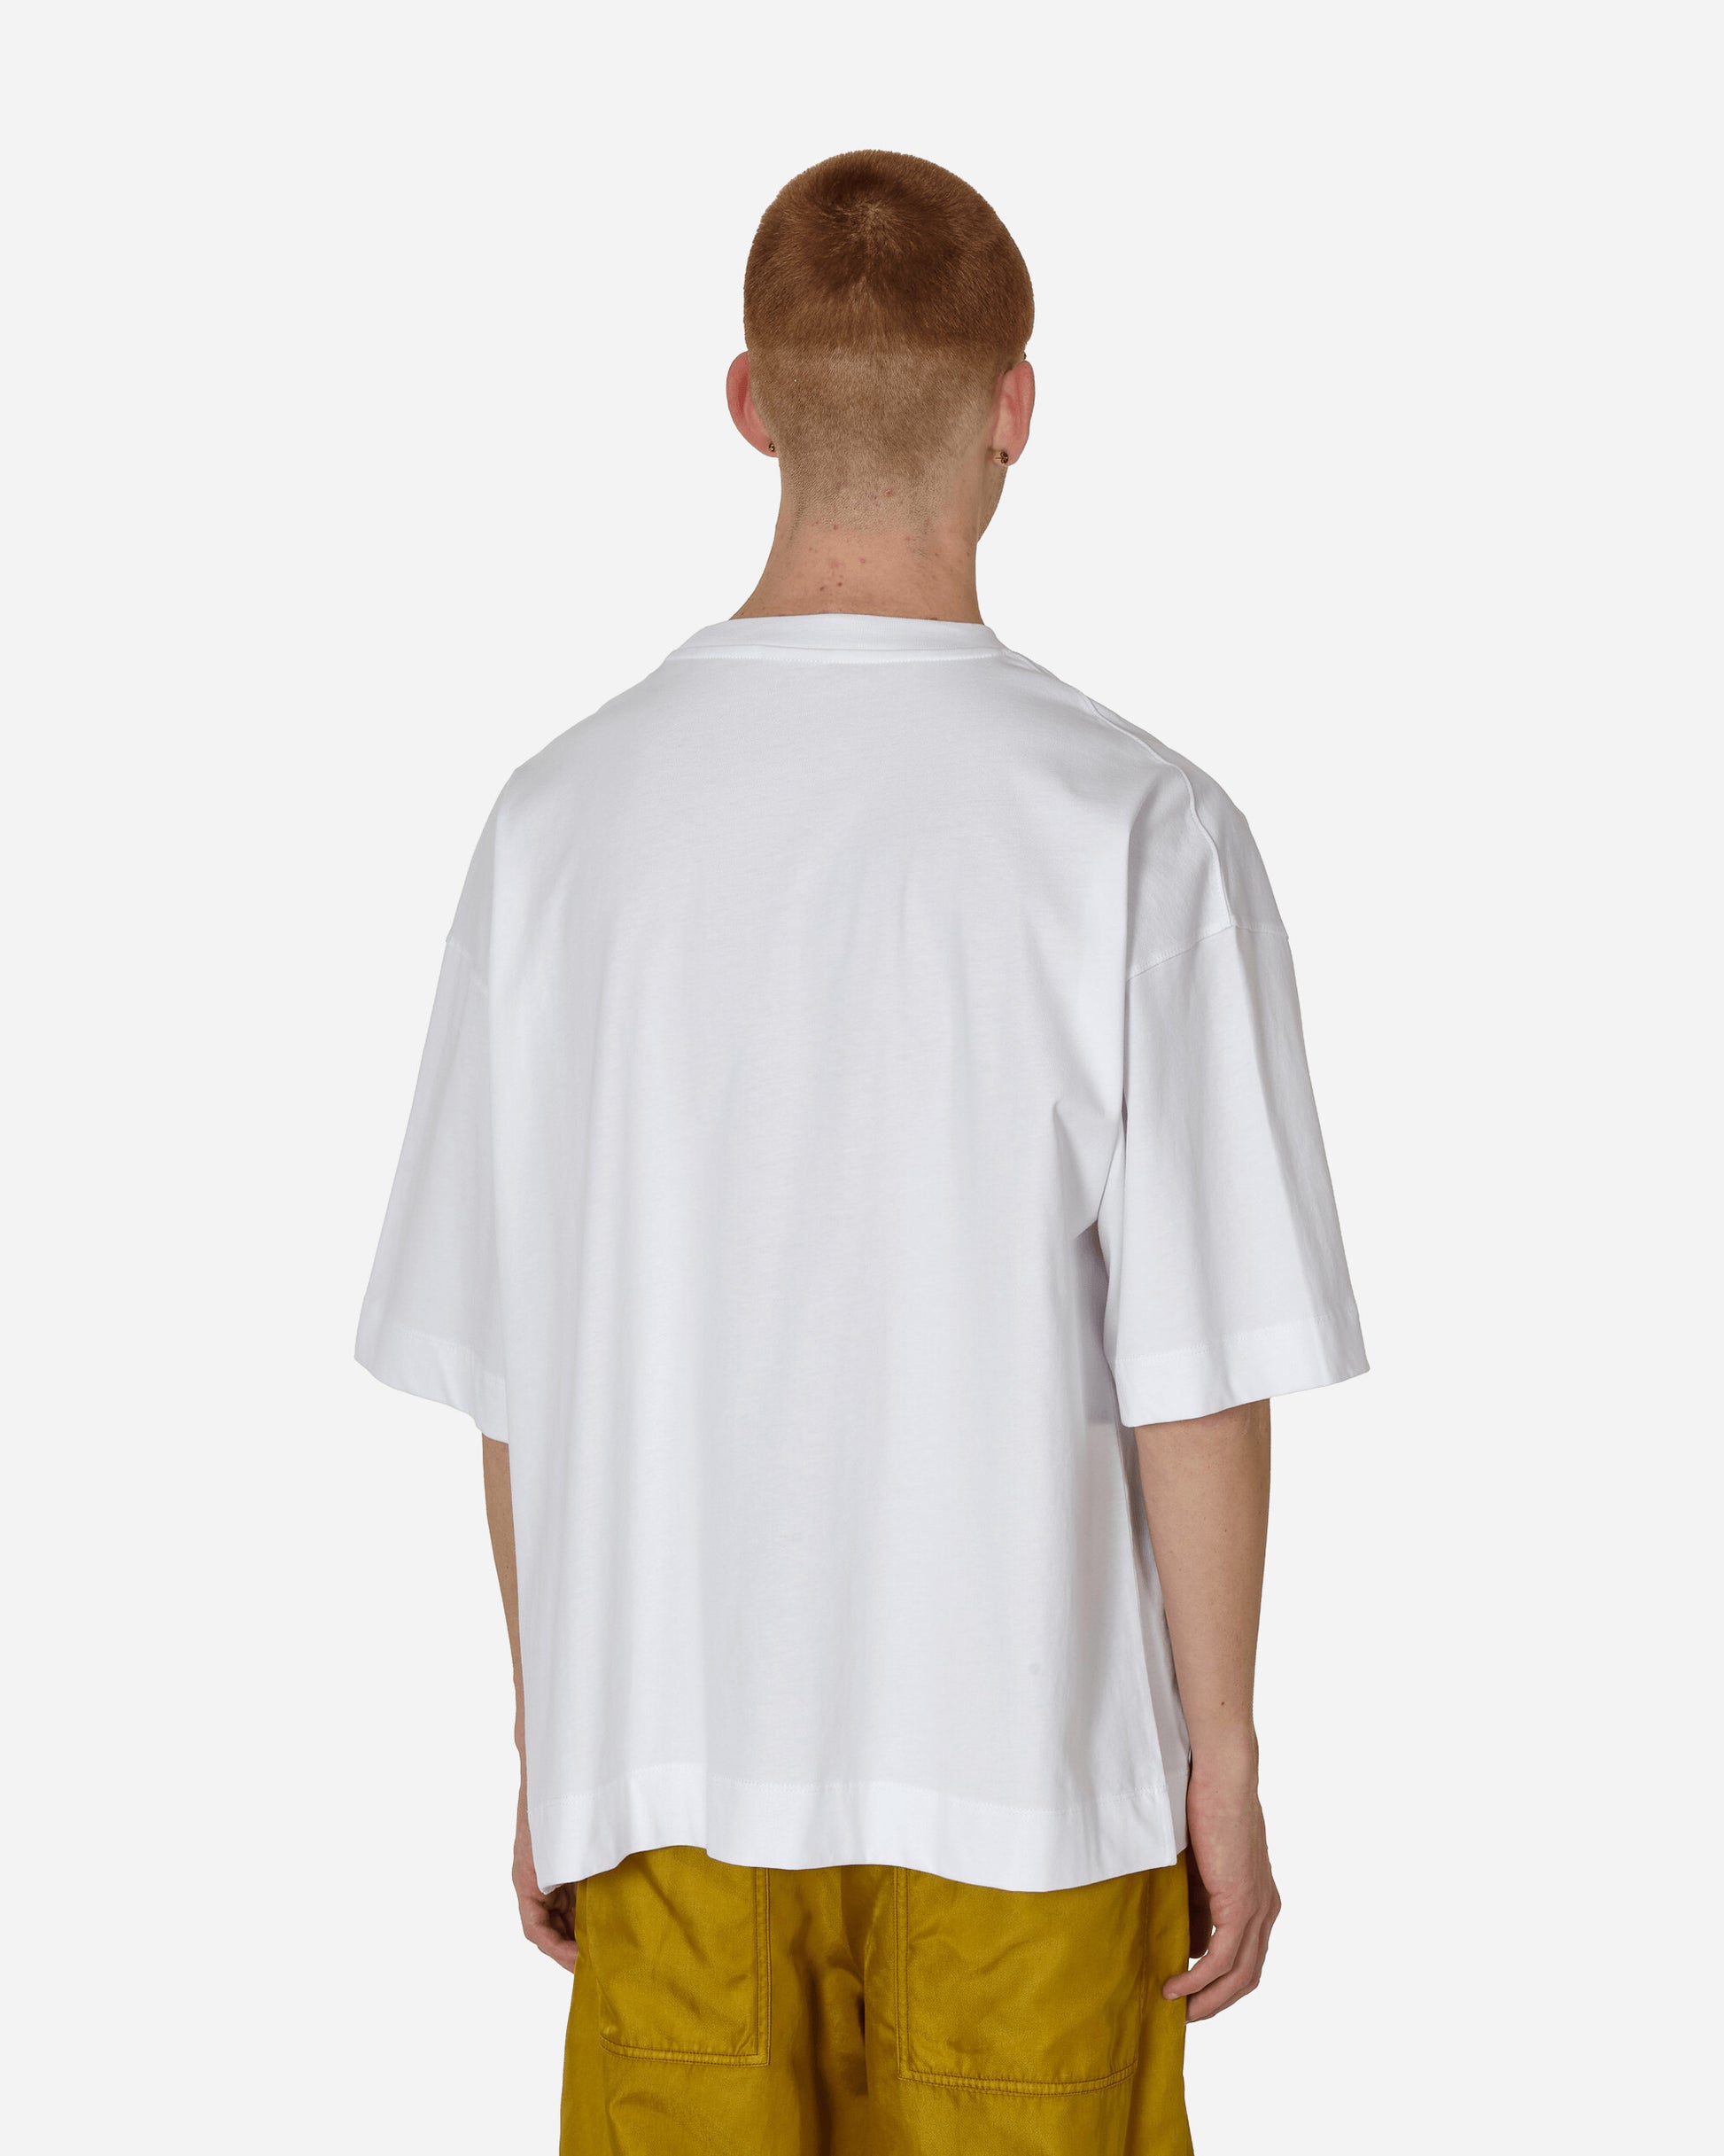 Dries Van Noten Hen T-Shirt White T-Shirts Shortsleeve 241-021117-8603 001